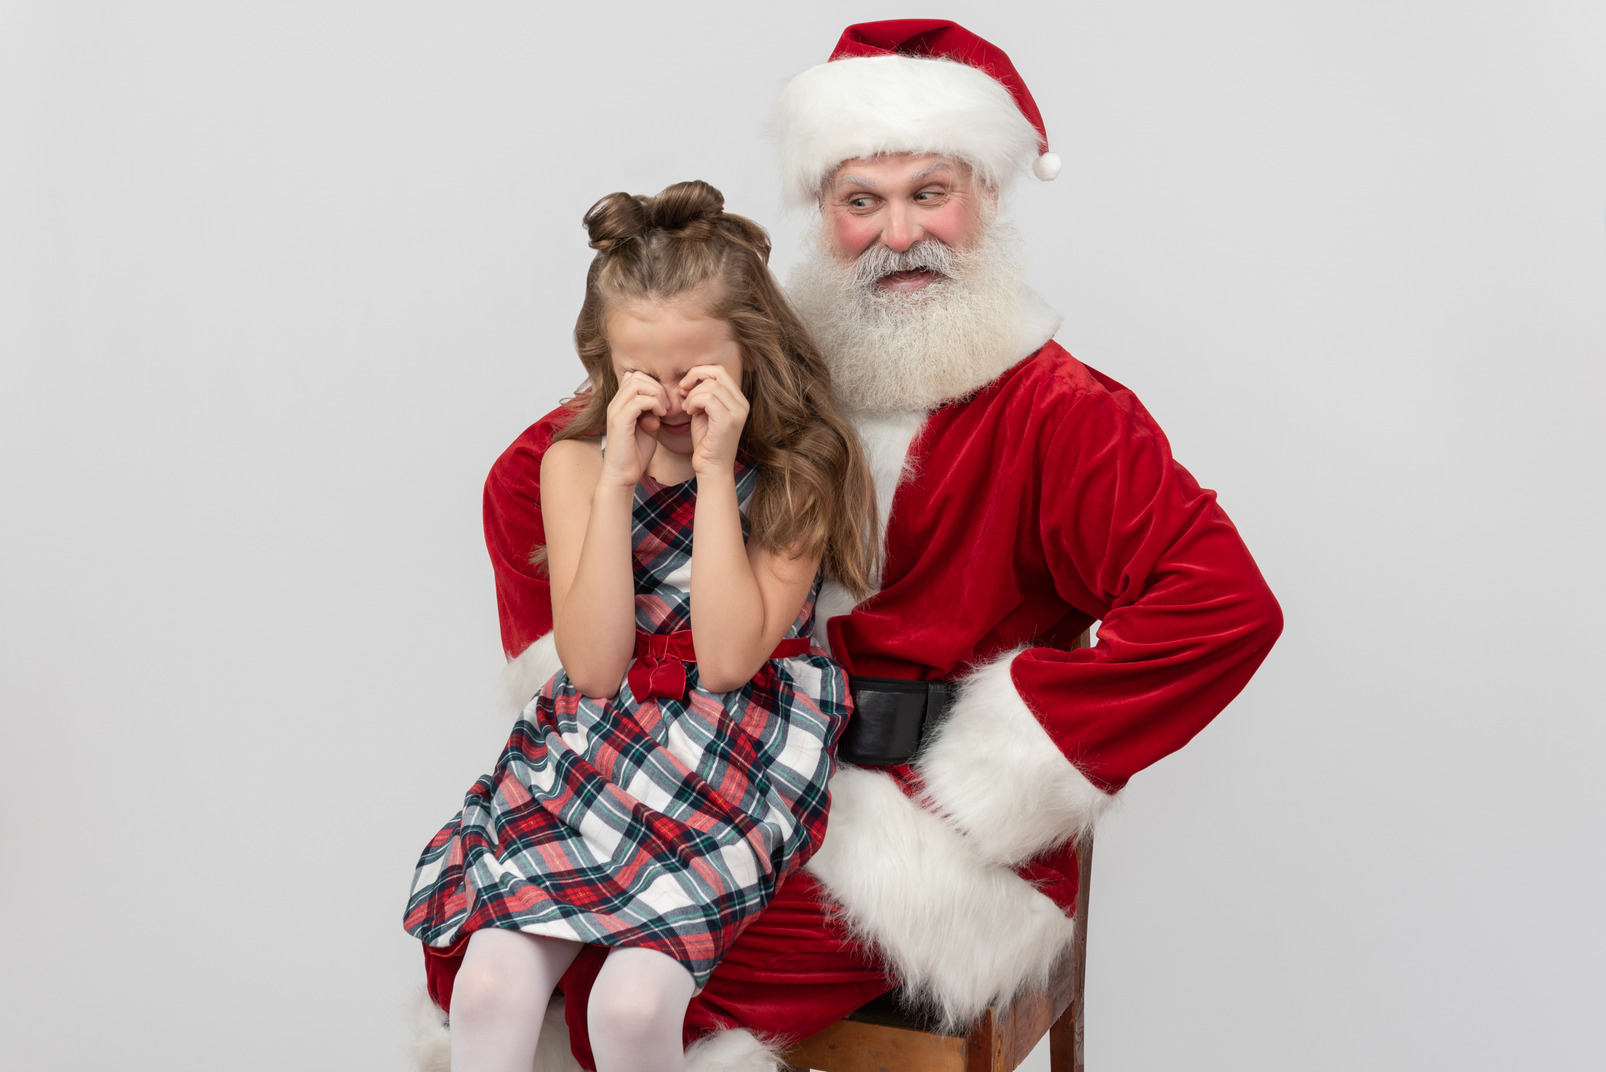 Kid girl sitting on santa's knees and crying